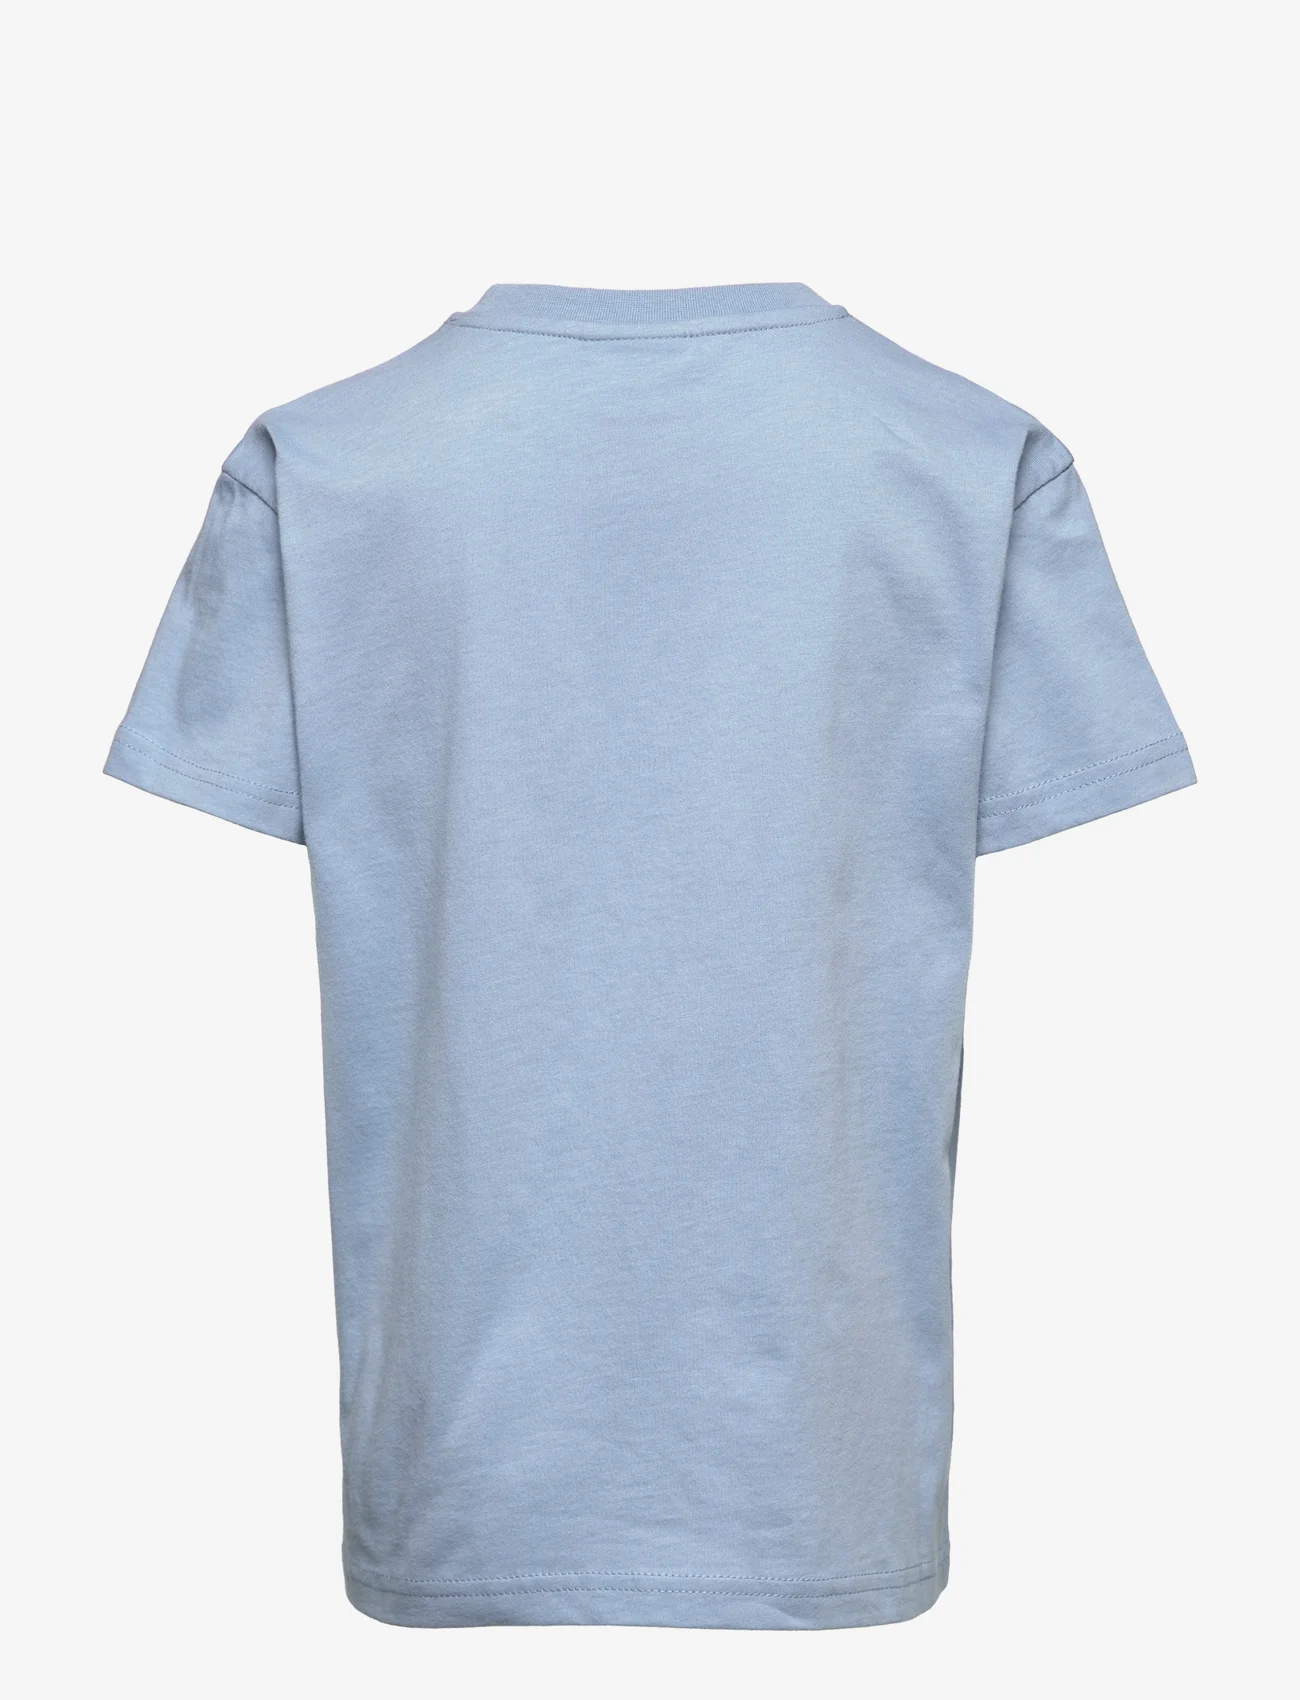 Sofie Schnoor Baby and Kids - T-shirt - kortärmade t-shirts - light blue - 1